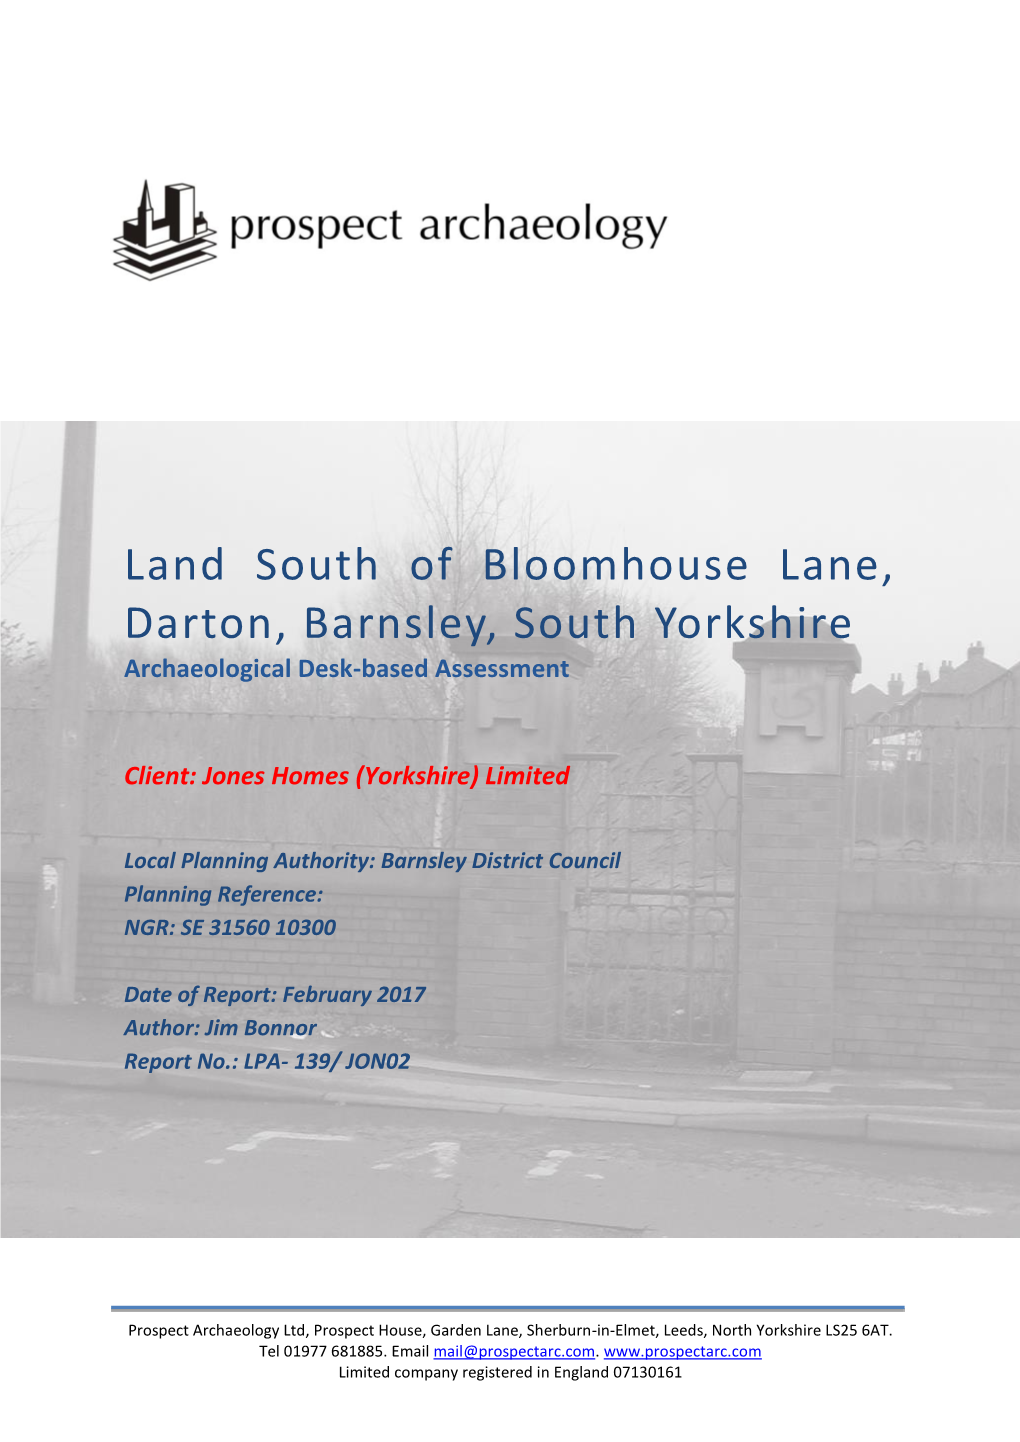 Land South of Bloomhouse Lane, Darton, Barnsley, South Yorkshire Archaeological Desk-Based Assessment